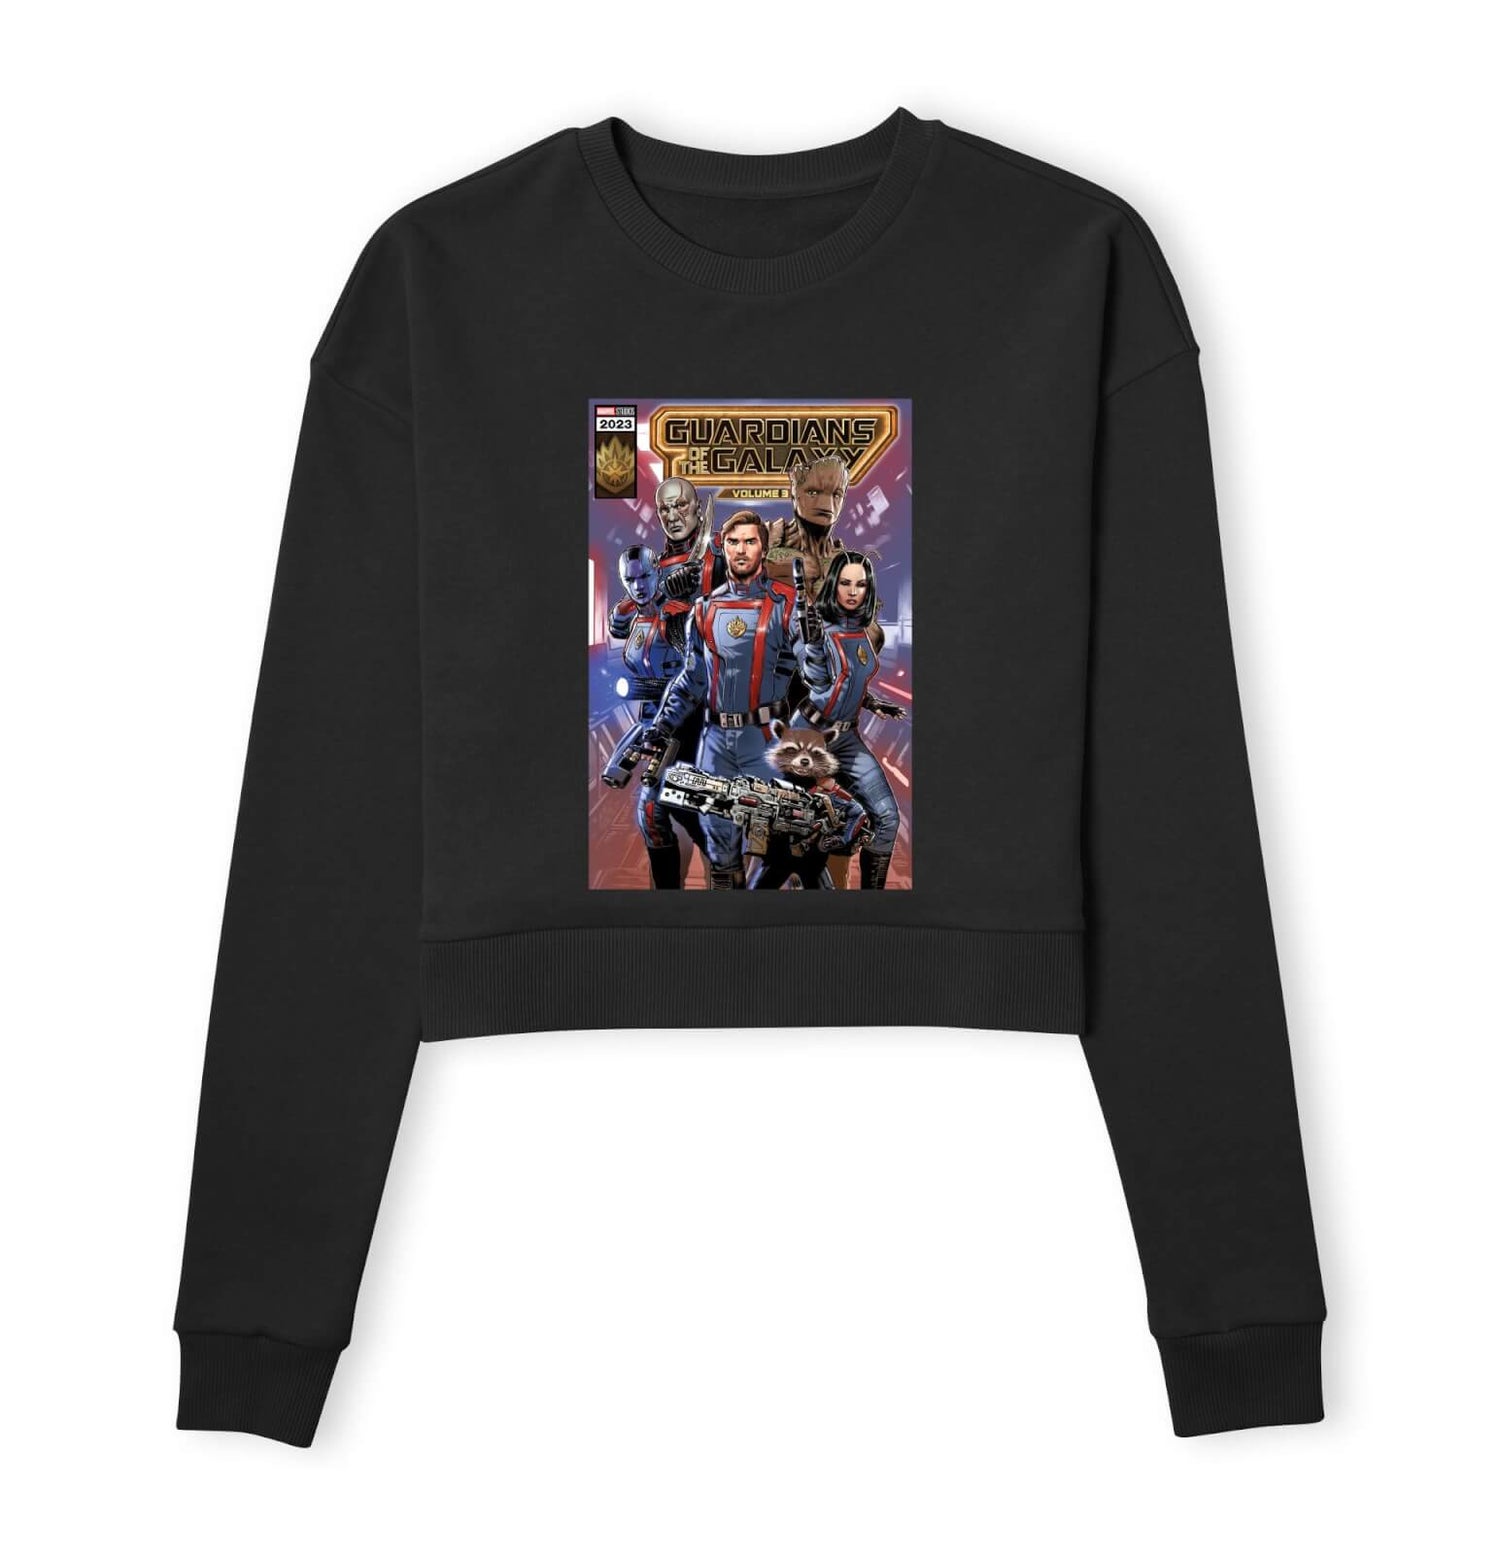 Guardians of the Galaxy Photo Comic Cover Women's Cropped Sweatshirt - Black